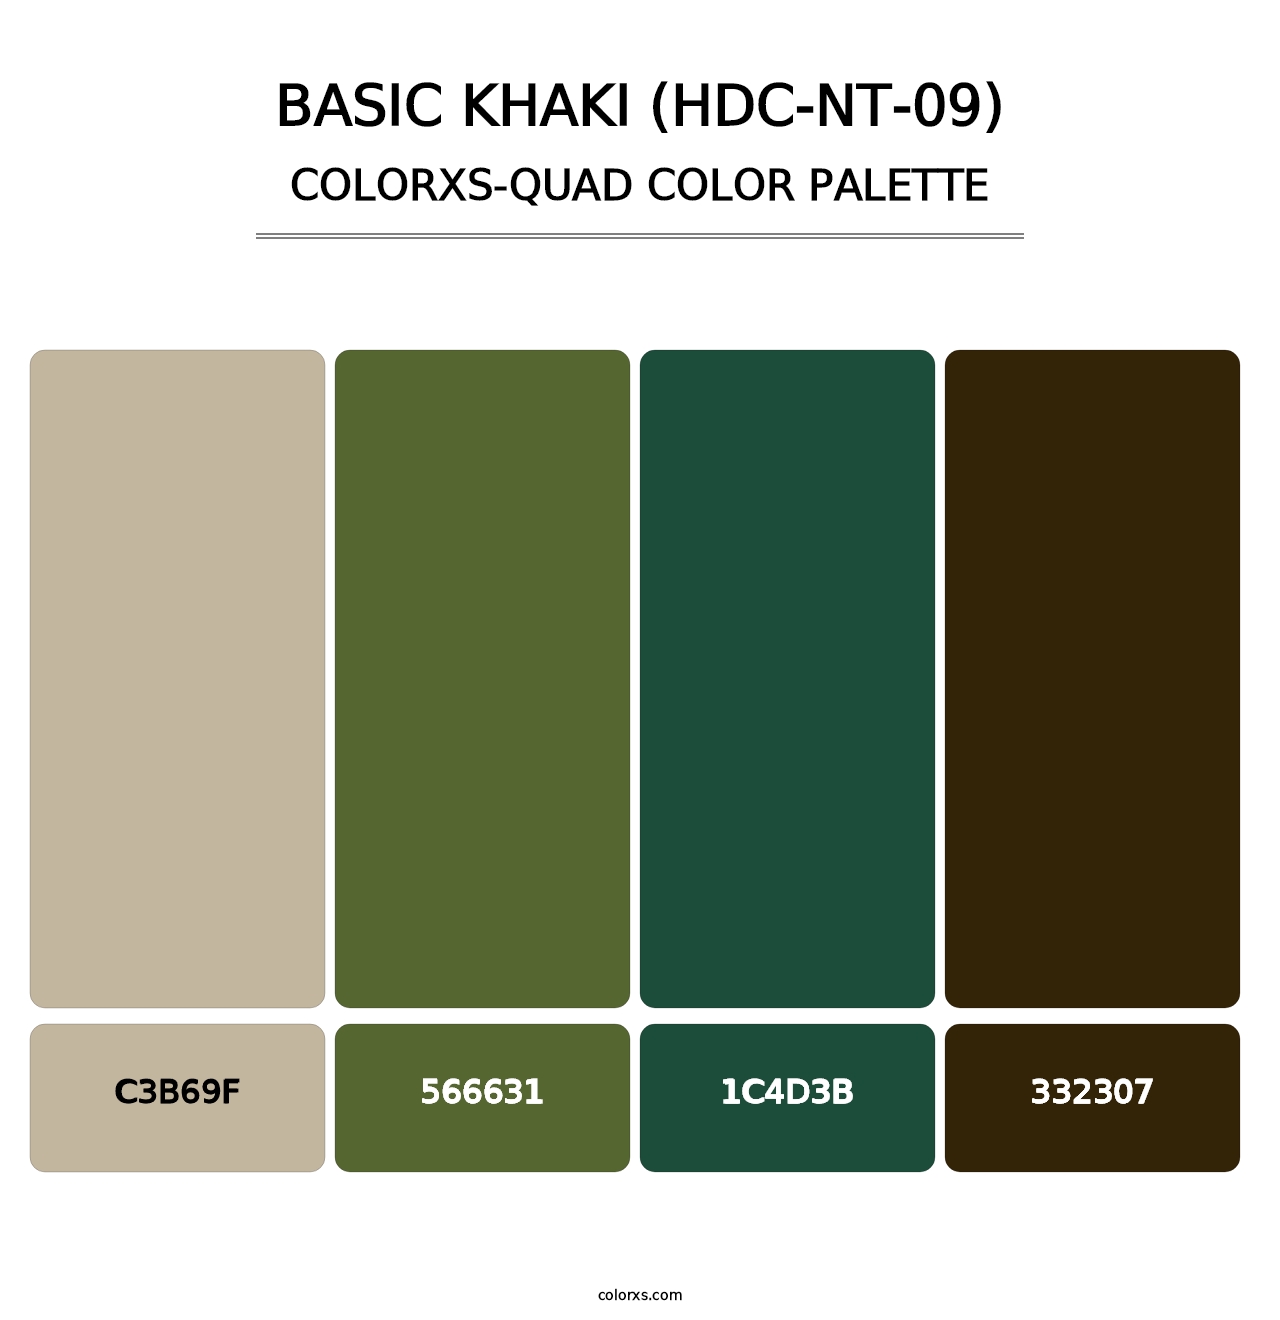 Basic Khaki (HDC-NT-09) - Colorxs Quad Palette